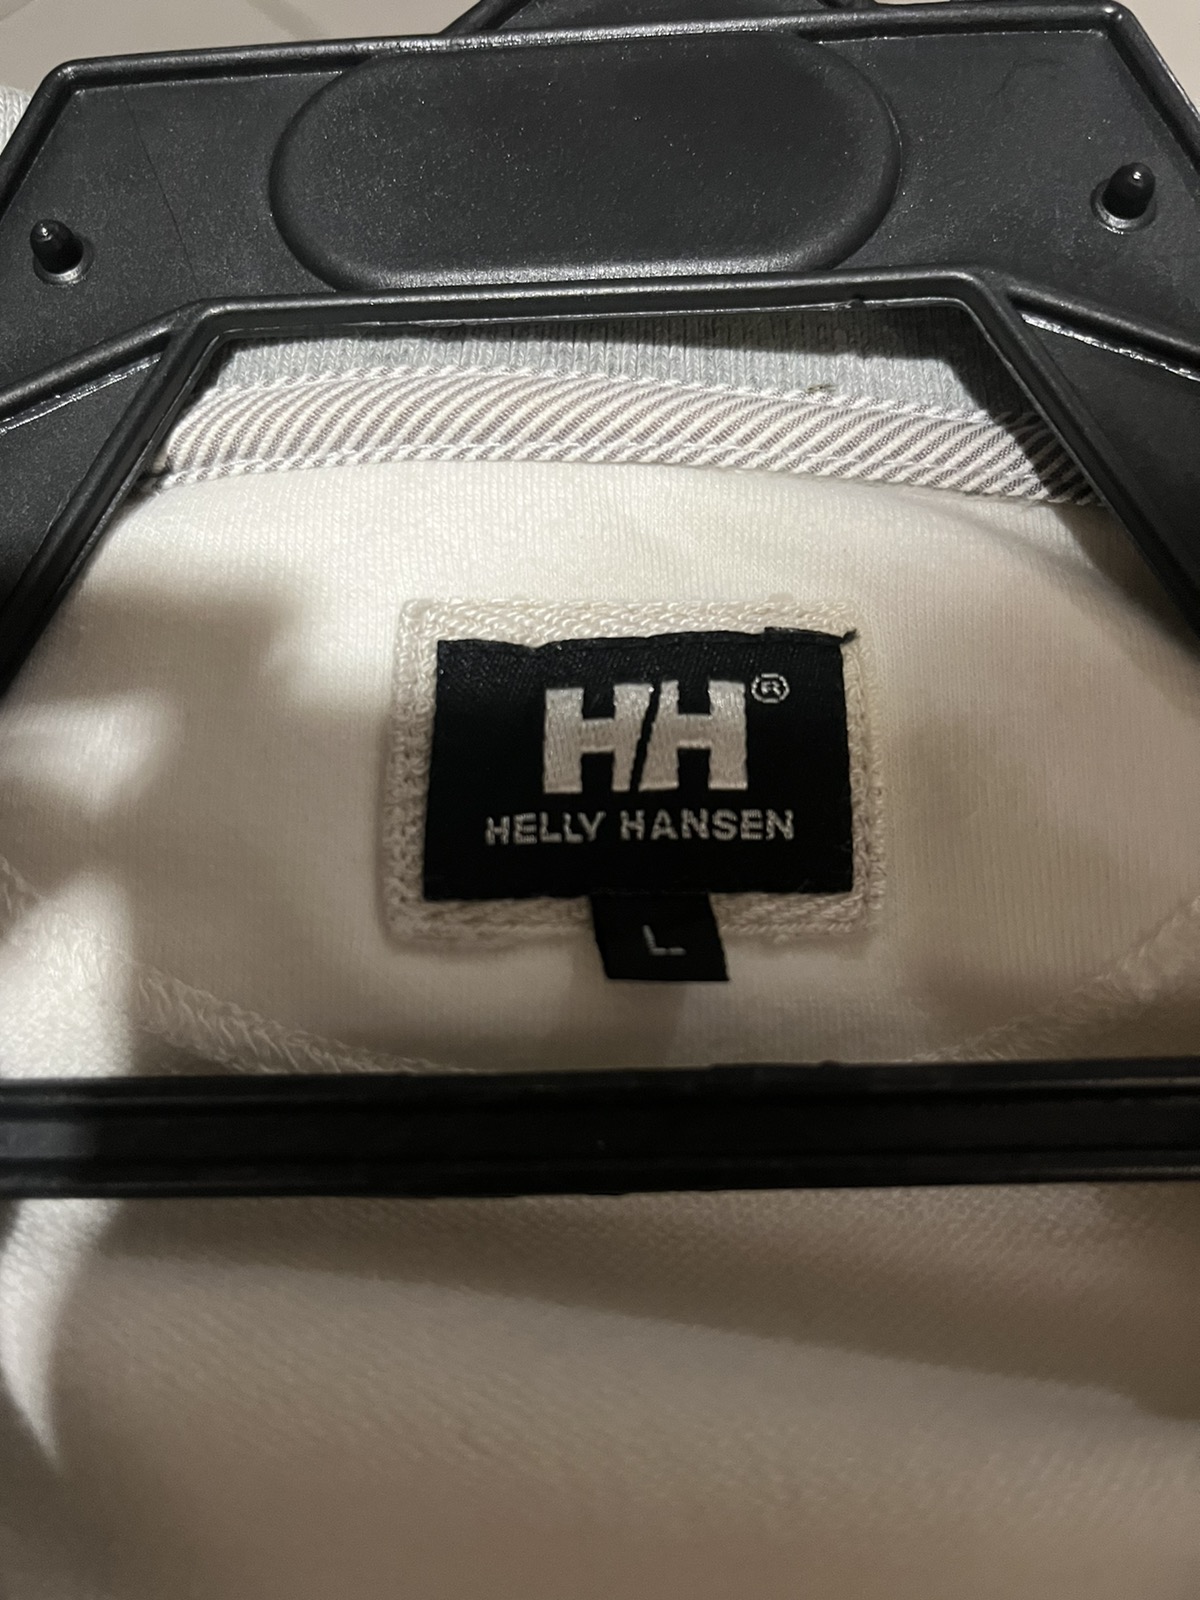 Helly Hansen - Helly hanson jacket - 6